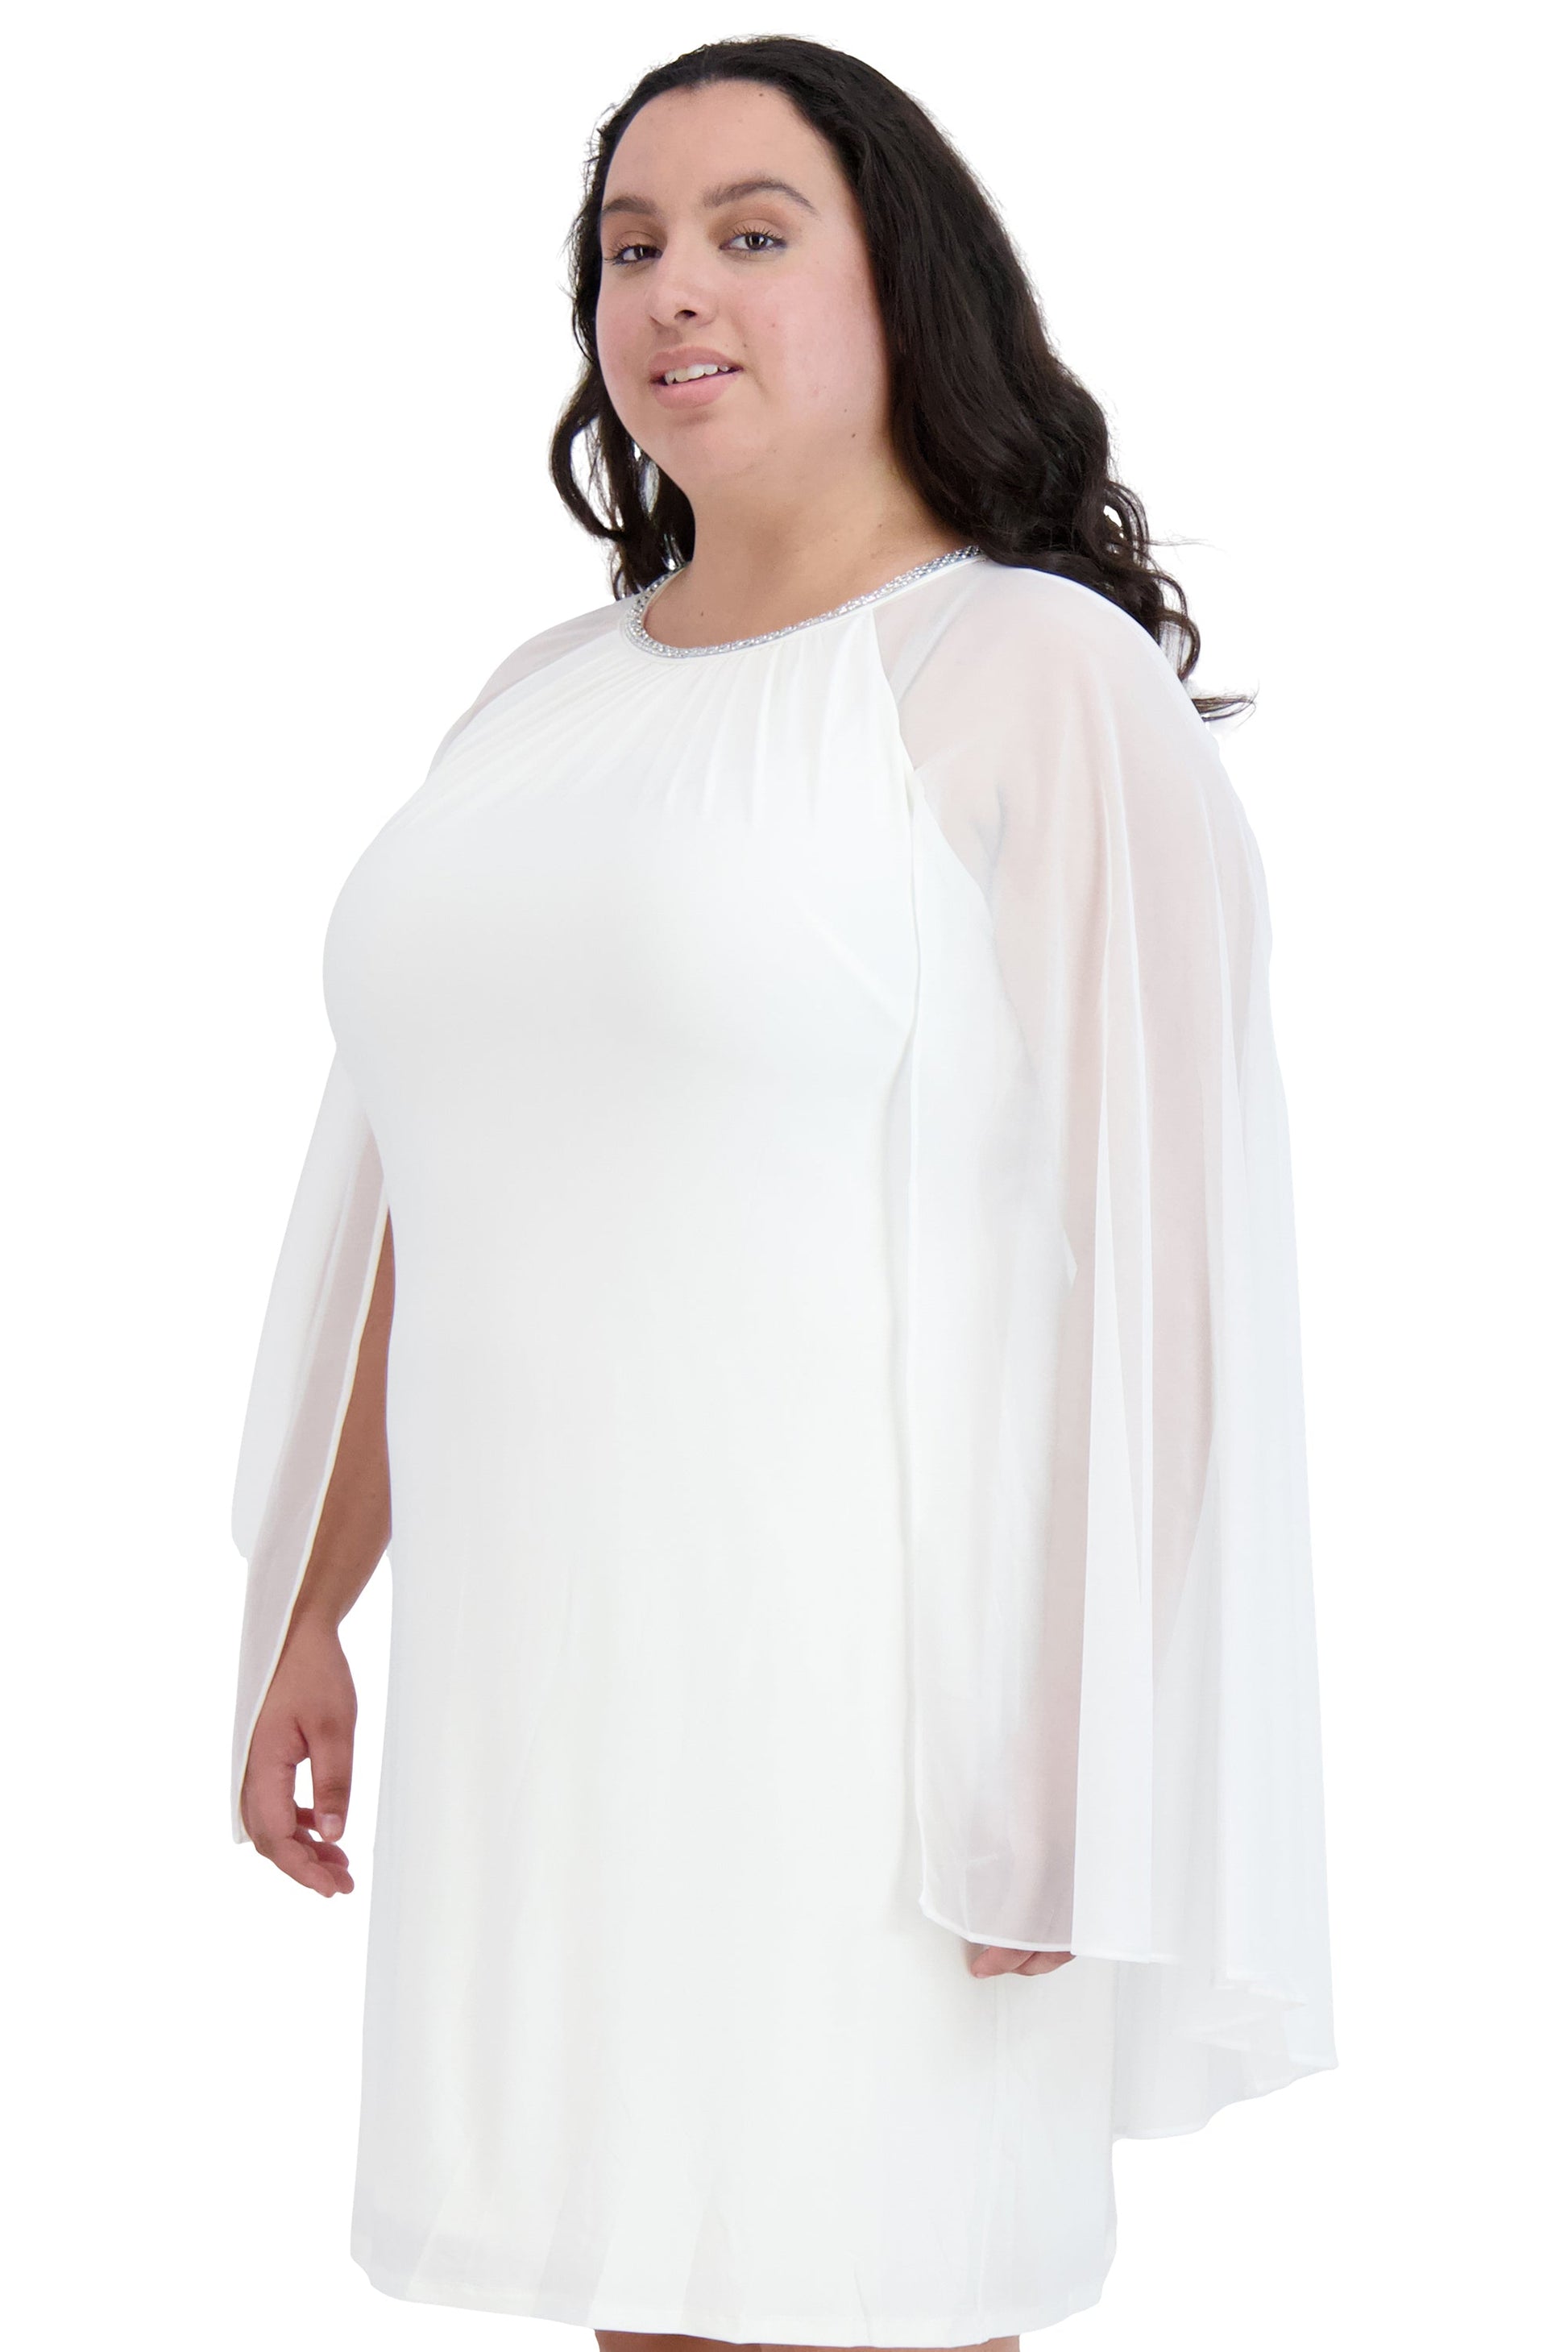 Women Plus Size Cape Dress with Rhinestone Neckline – SleekTrends